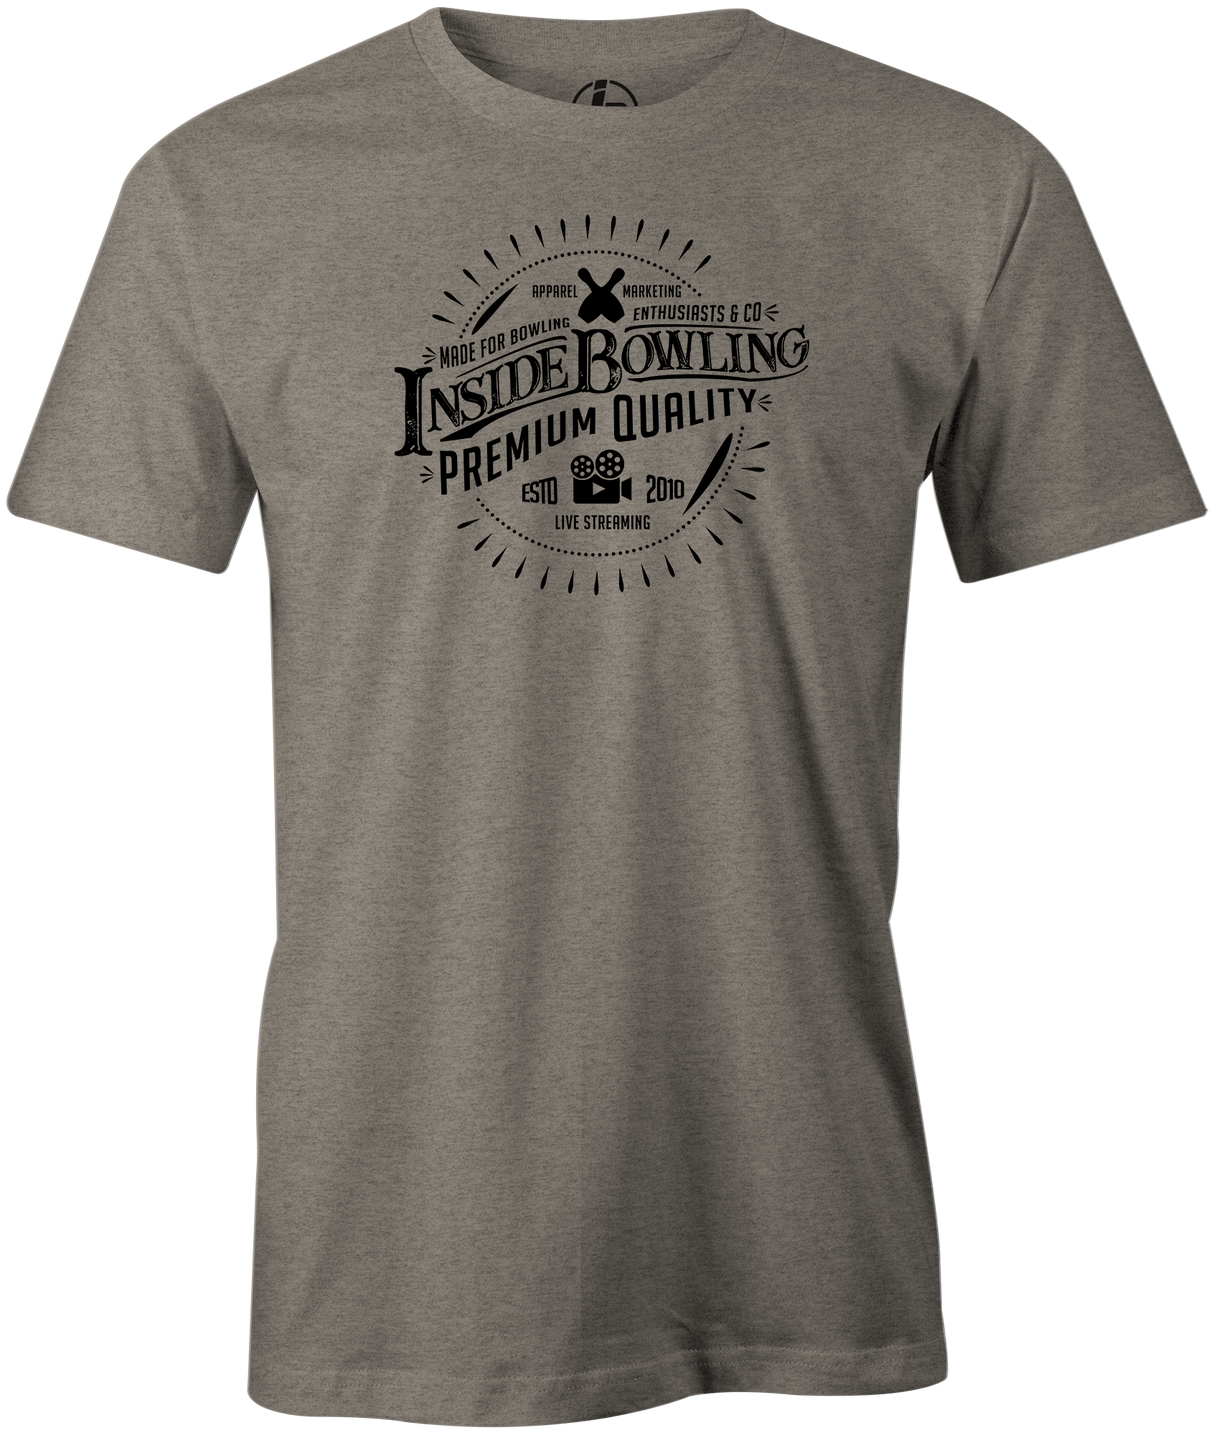 Inside Bowling Vintage Men's T-Shirt, Grey, tee, tee-shirt, teeshirt, tee shirt, tshirt, t shirt, cool, novelty